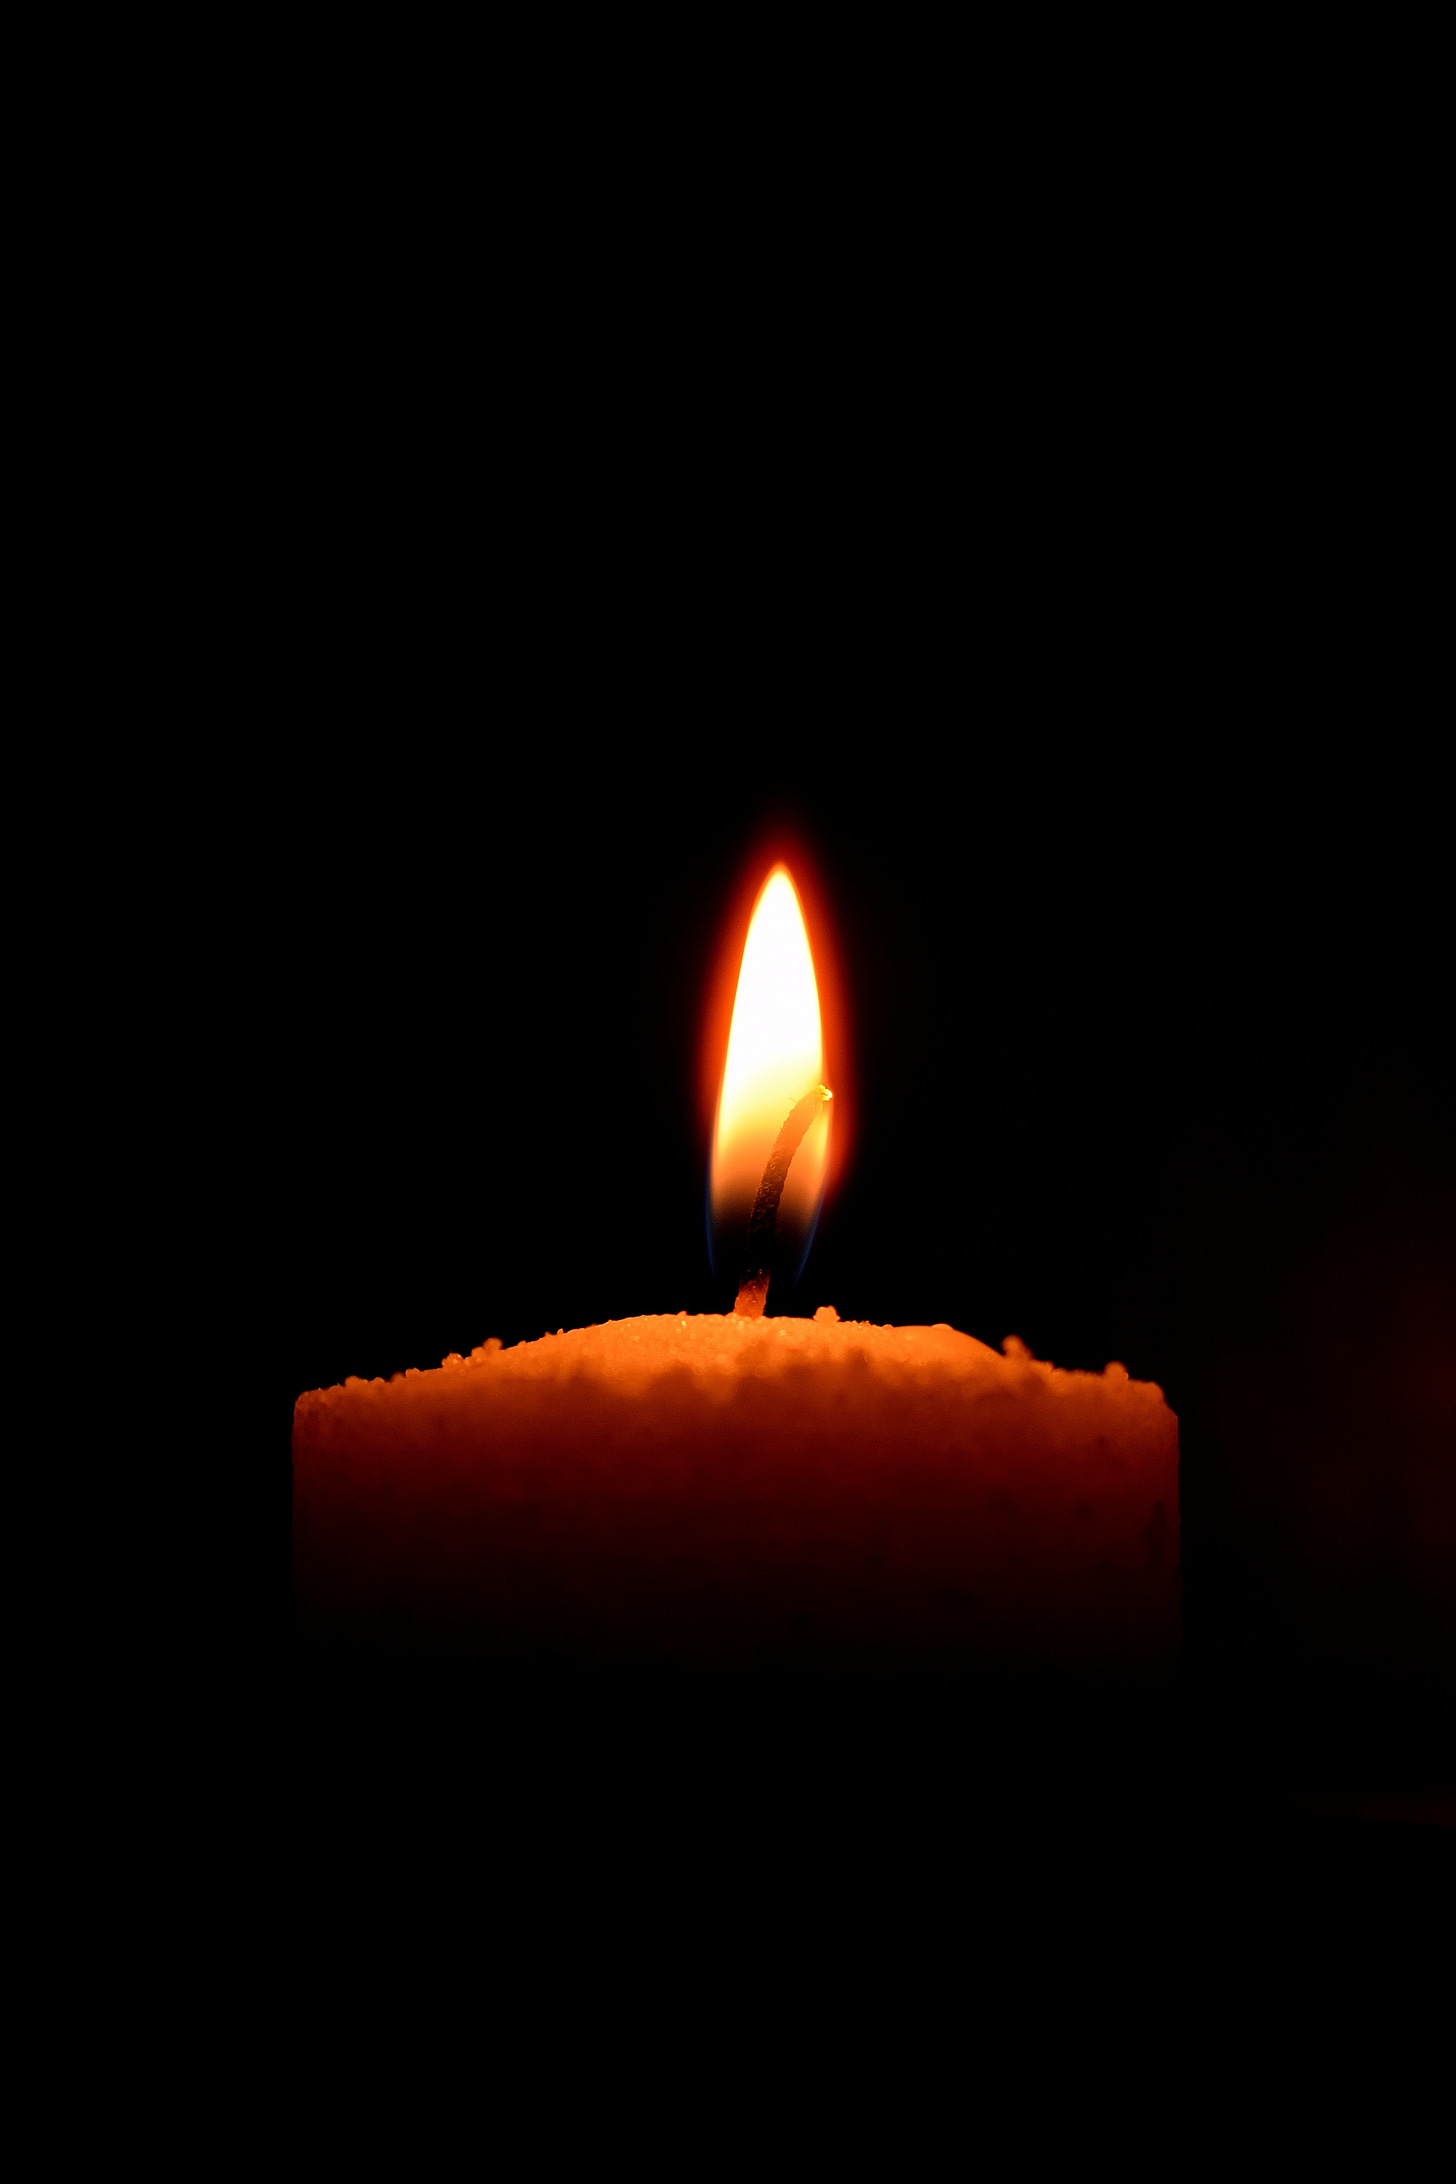 Candle on Black Background · Free Stock Photo